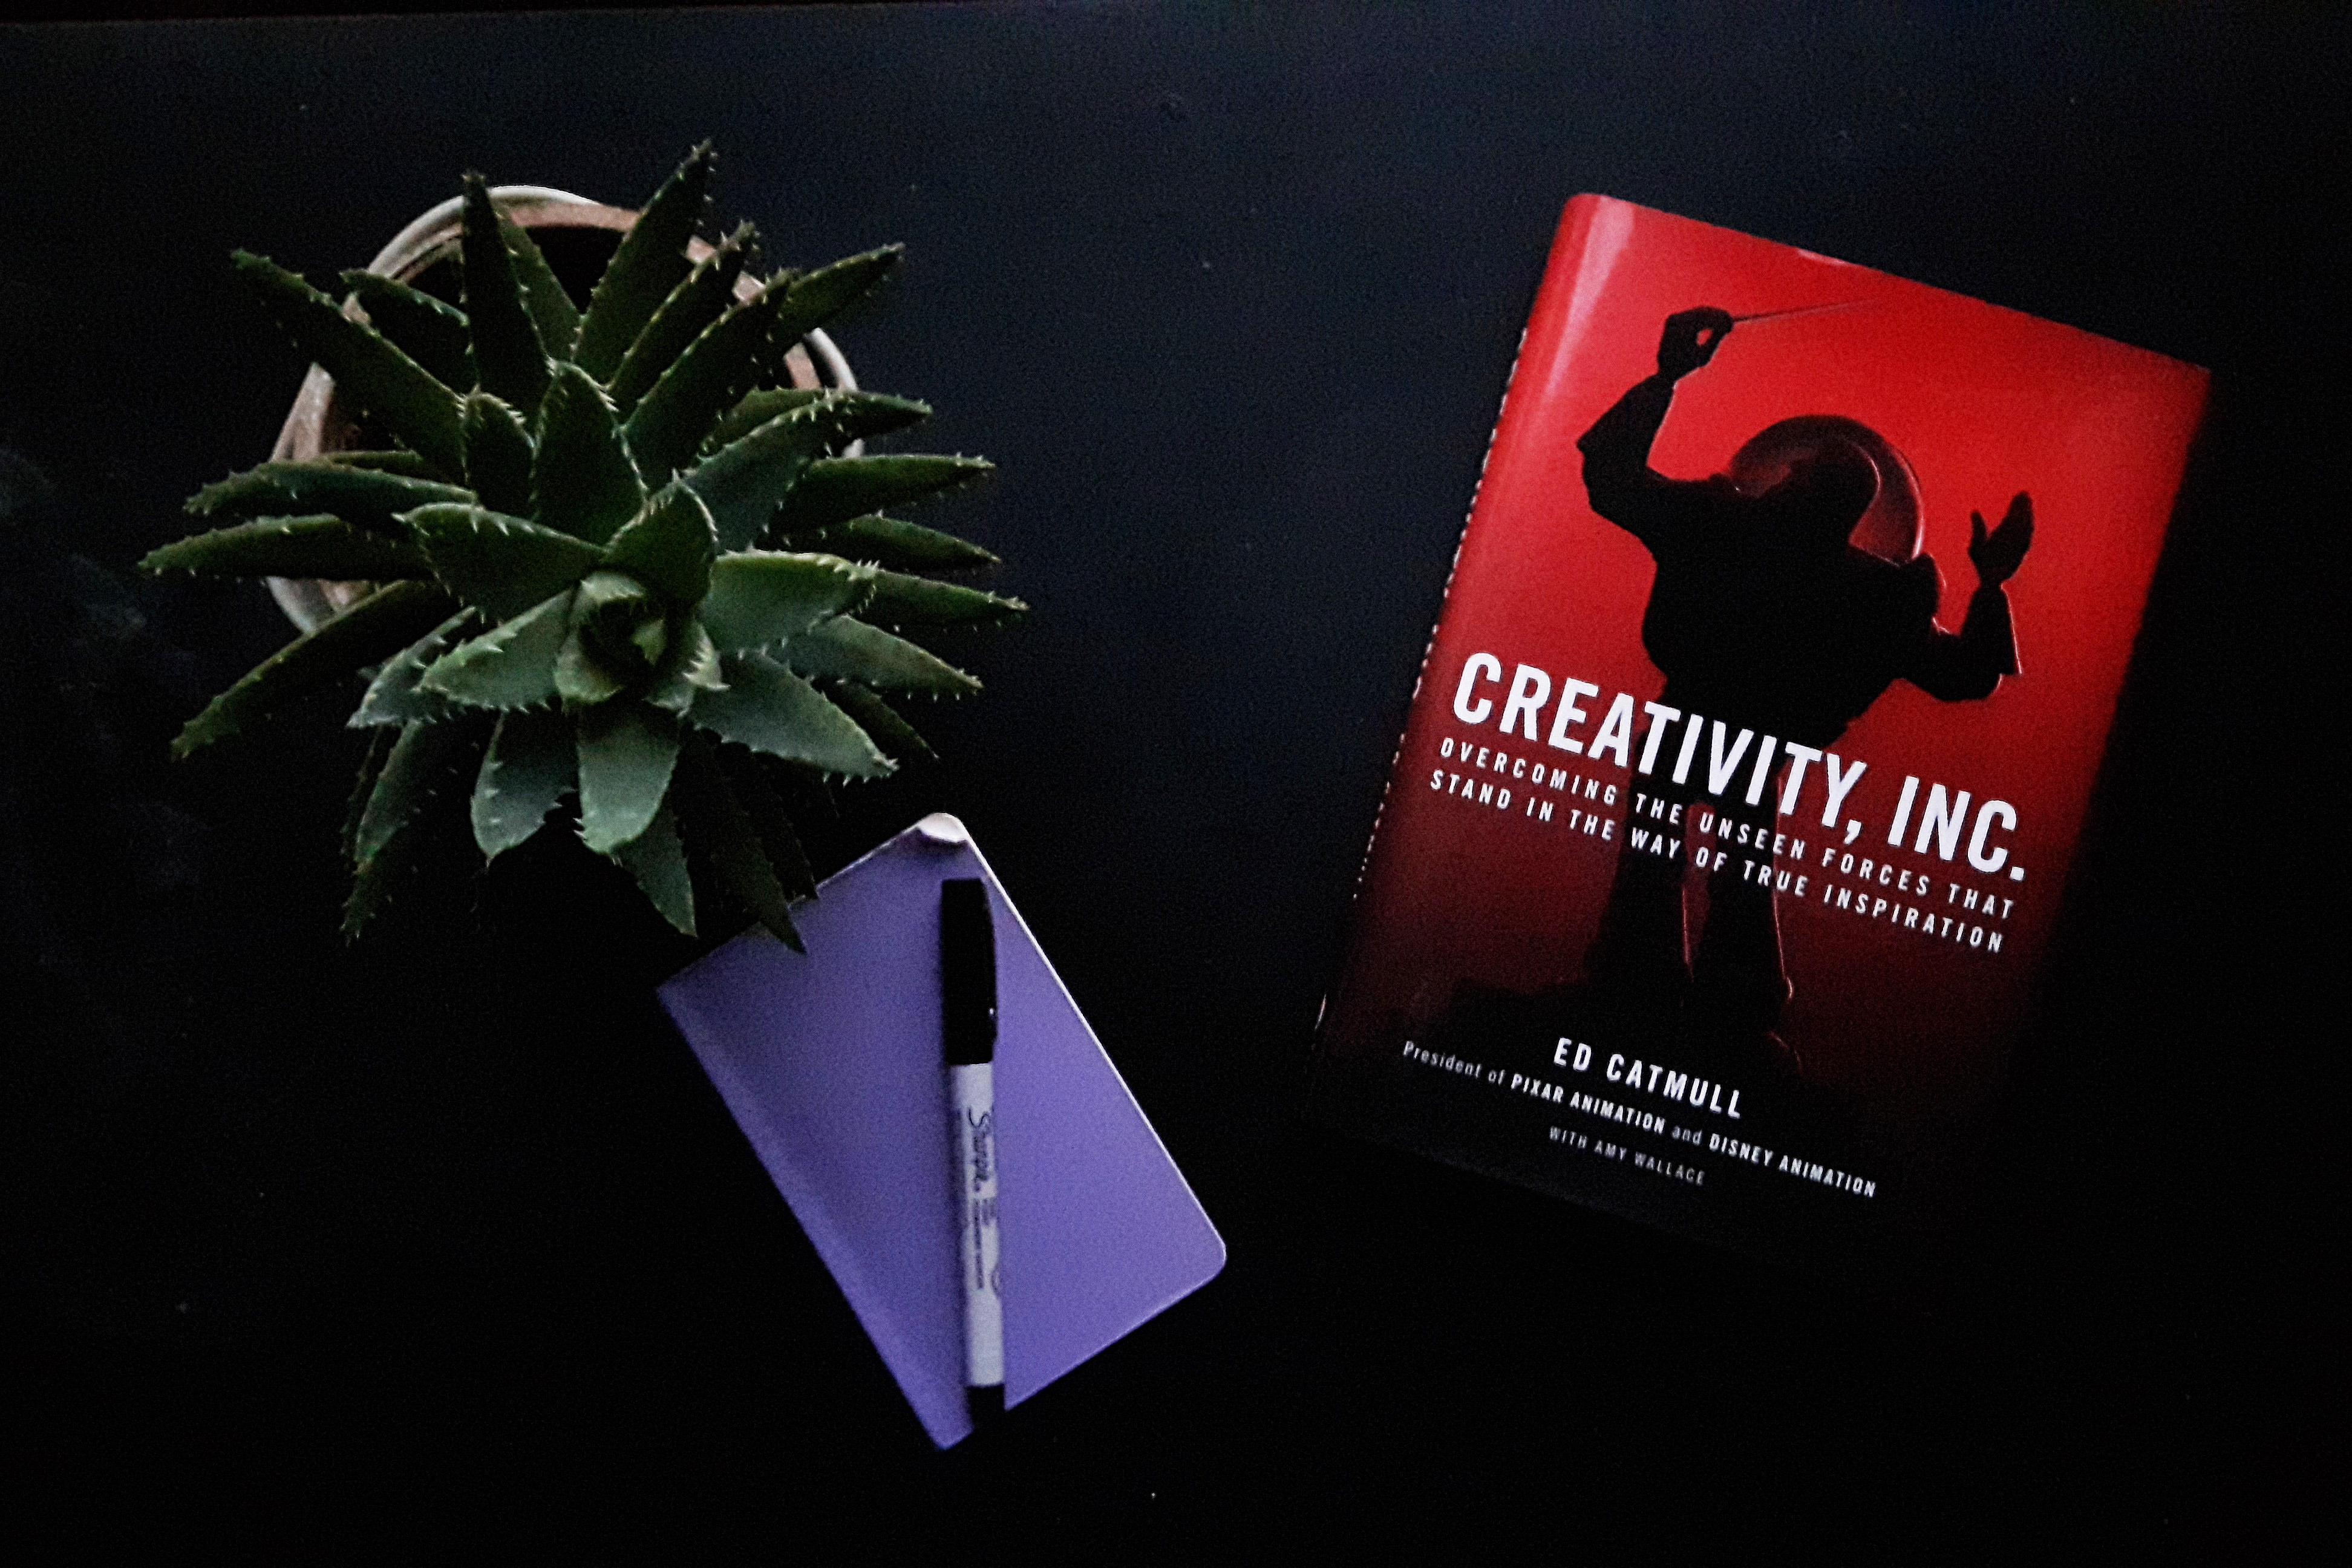 Creativity Inc. by Ed Catmull